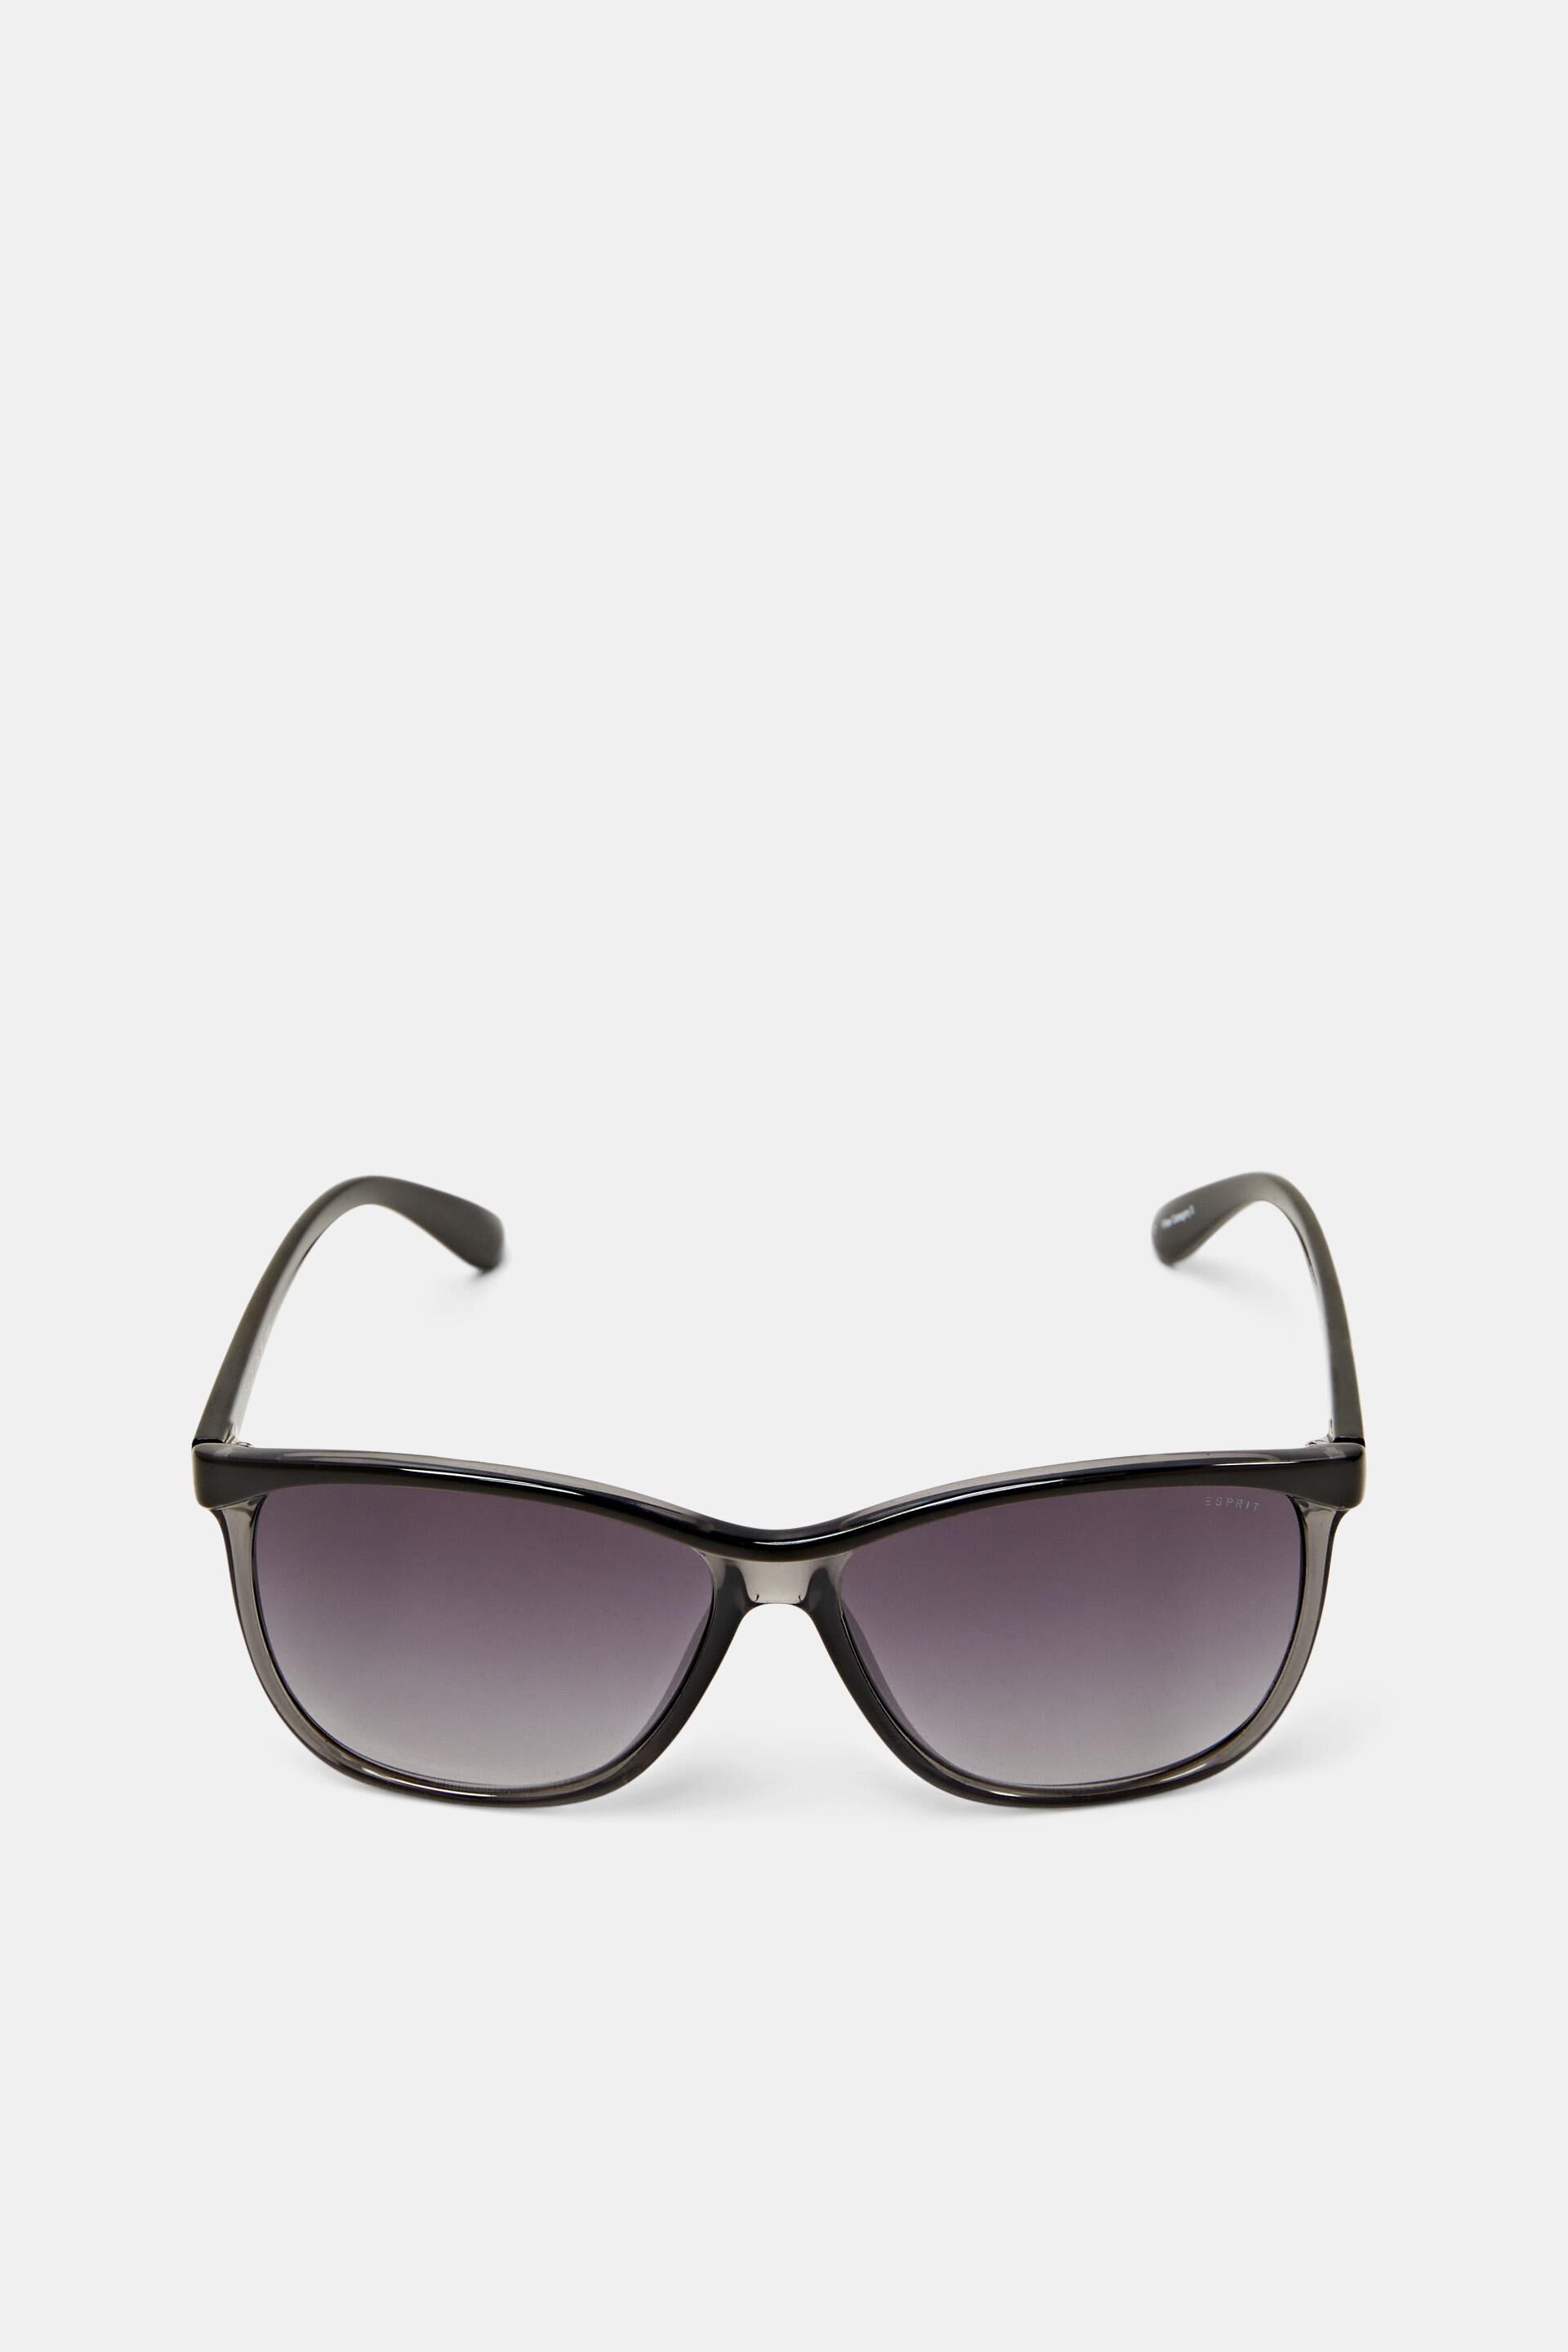 ESPRIT - Sonnenbrille mit semitransparentem Rahmen in unserem Online Shop